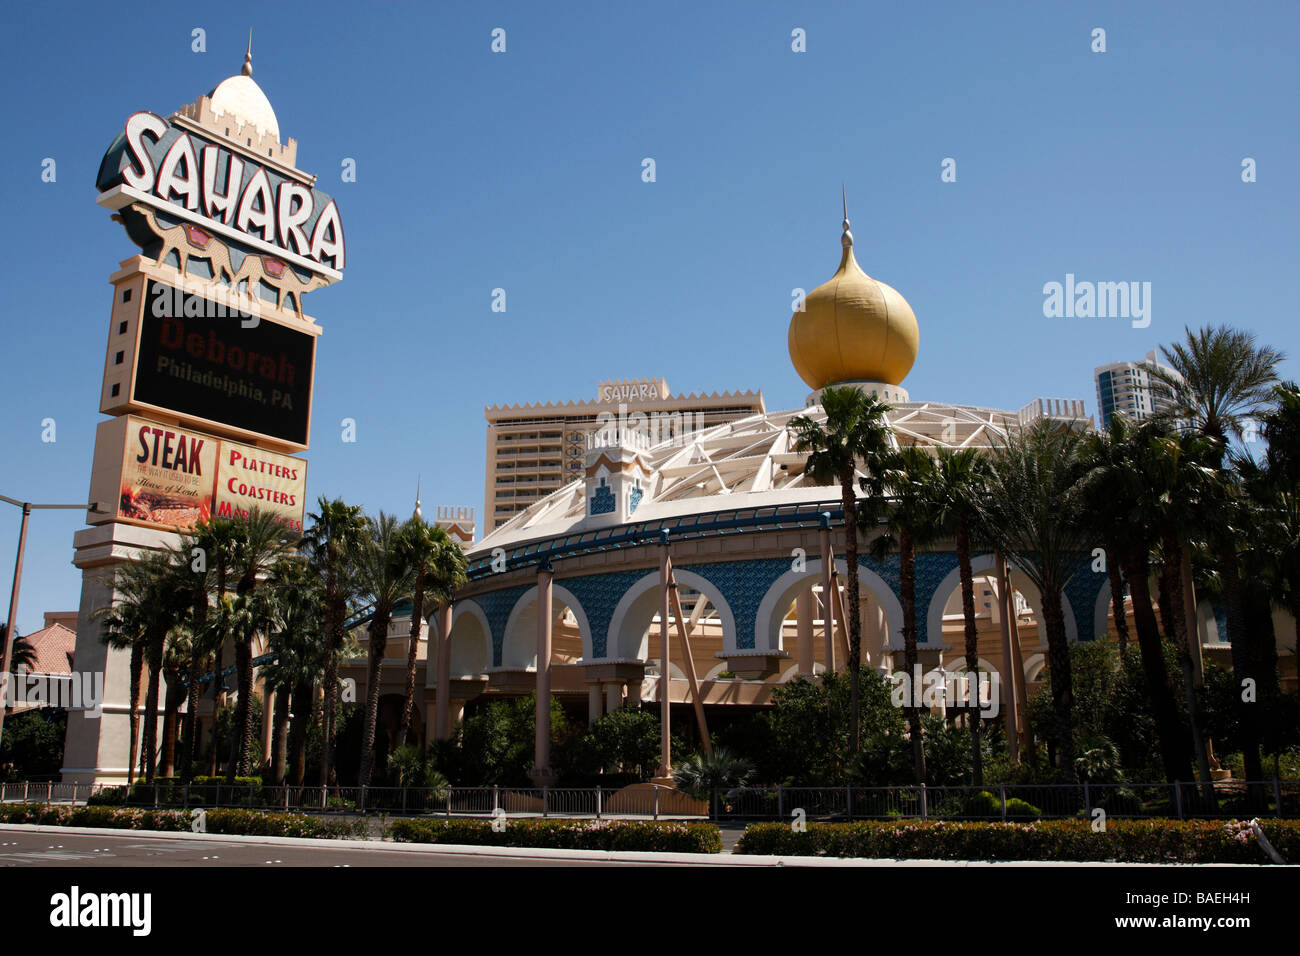 Le Sahara Hotel and Casino Las Vegas Boulevard las vegas nevada usa Banque D'Images